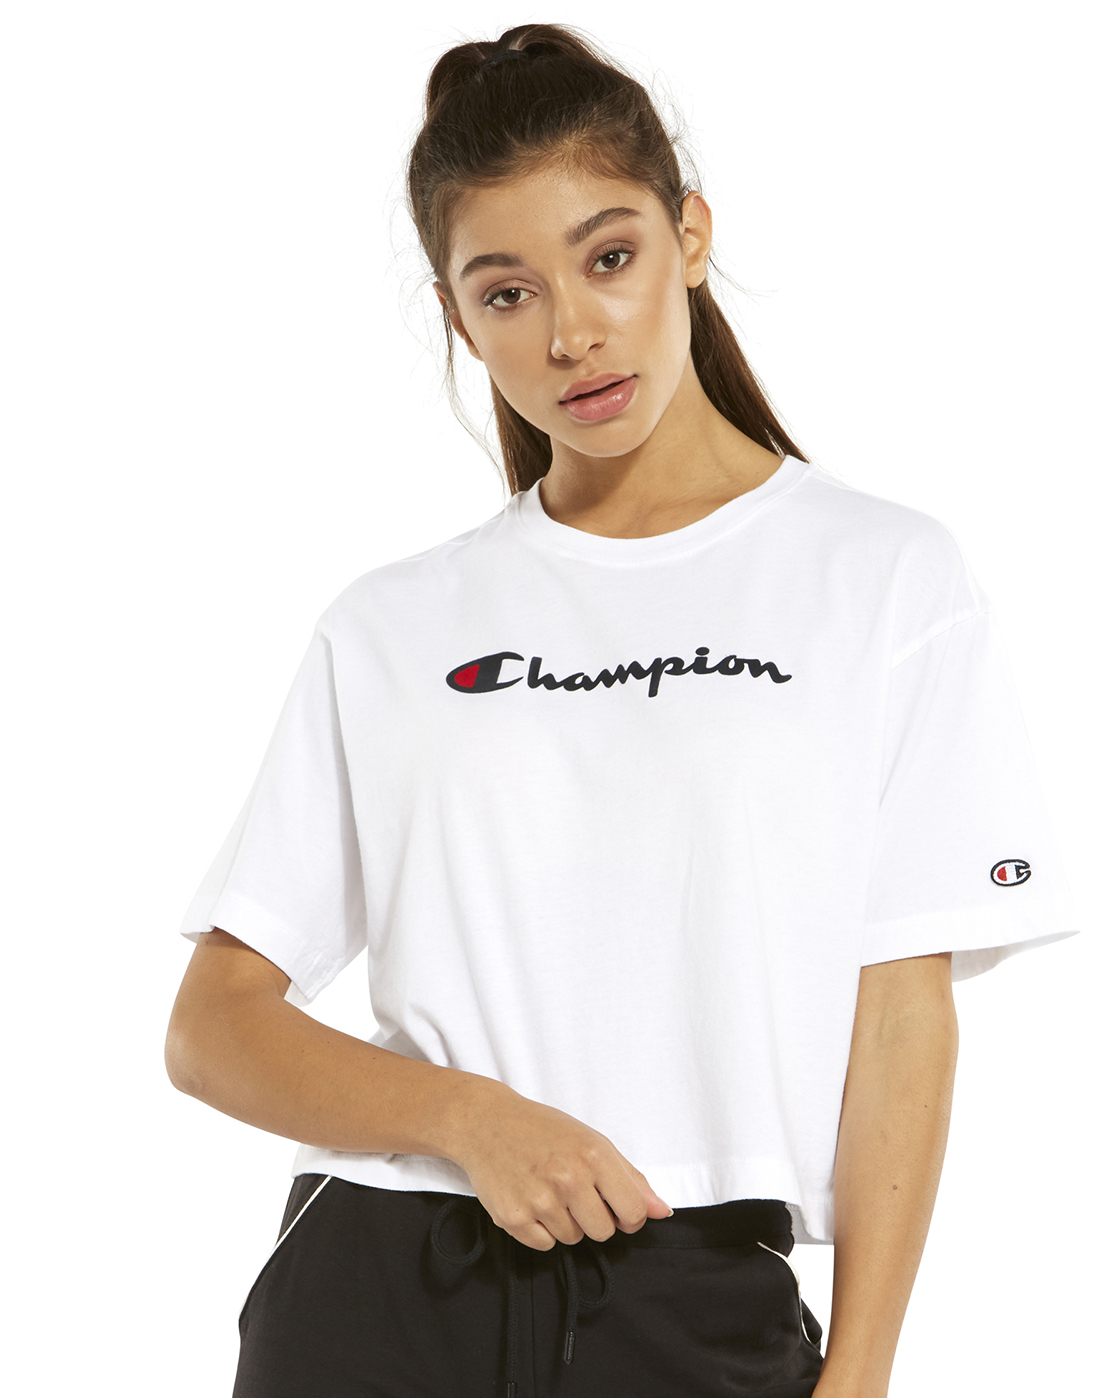 champion logo t shirts women's